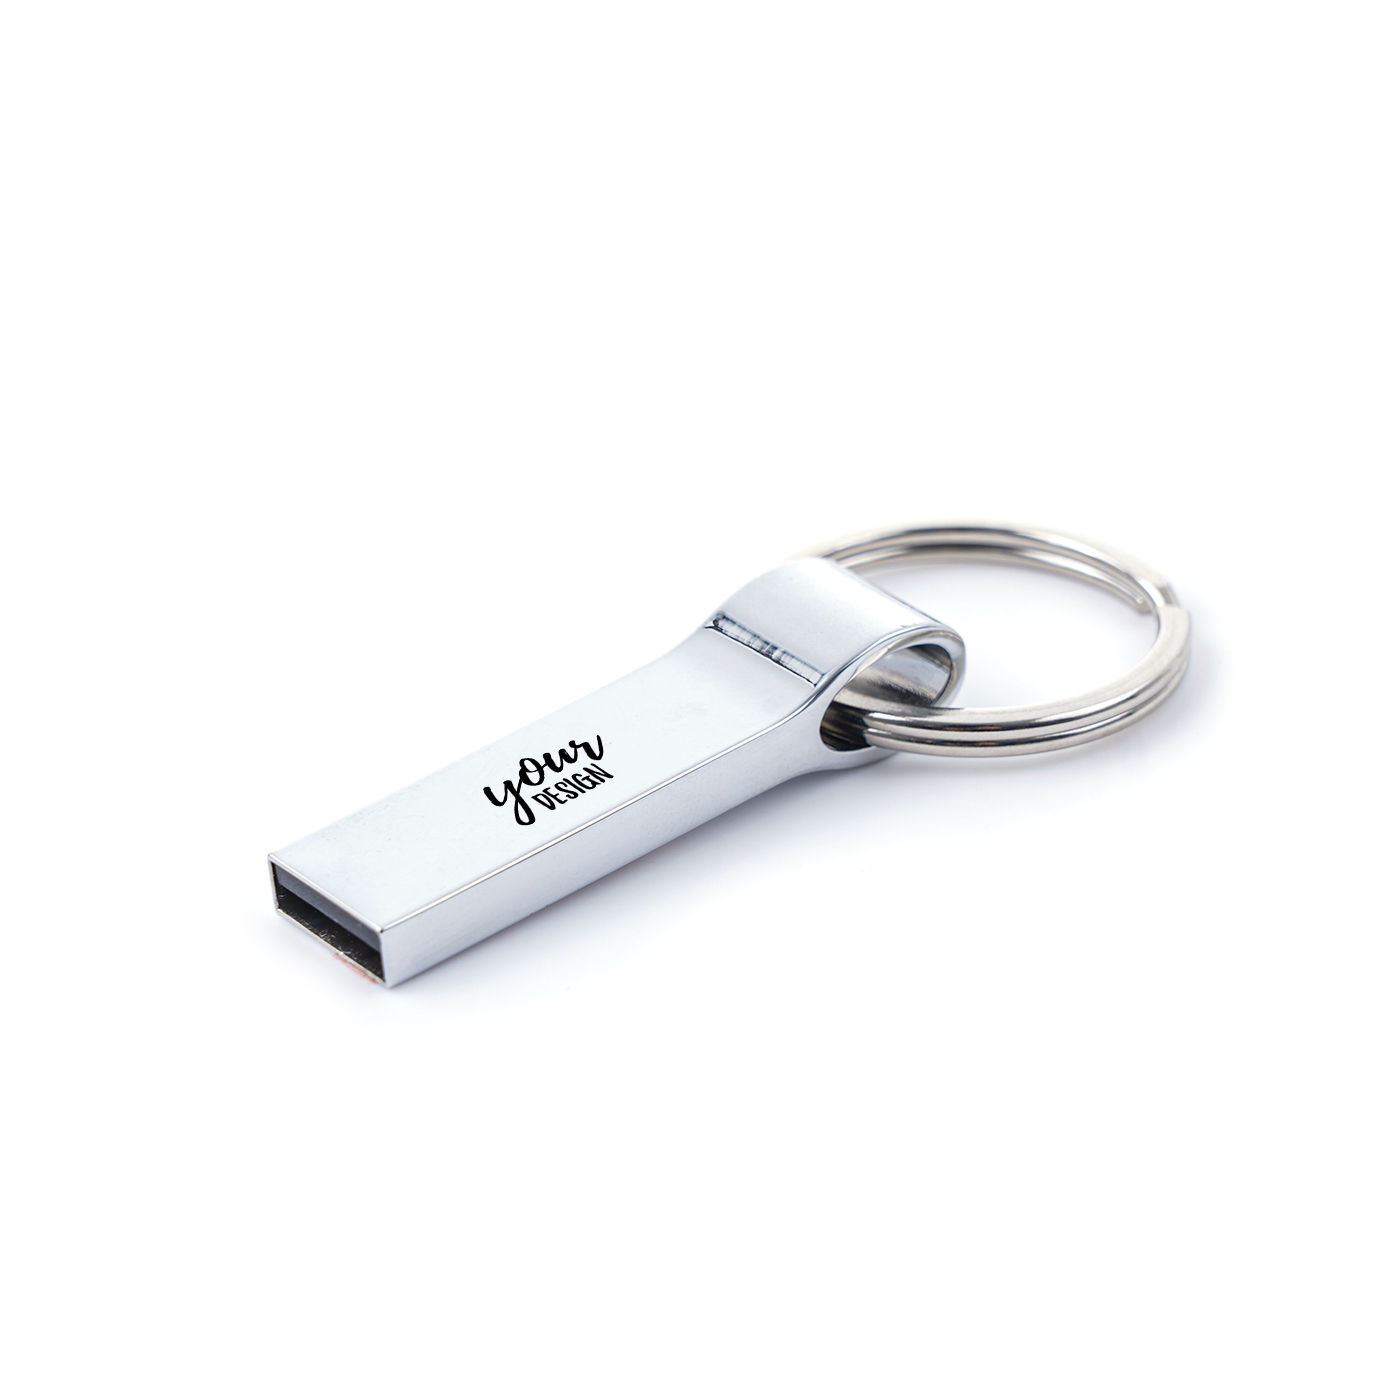 32GB Portable USB Flash Drive With Keychain